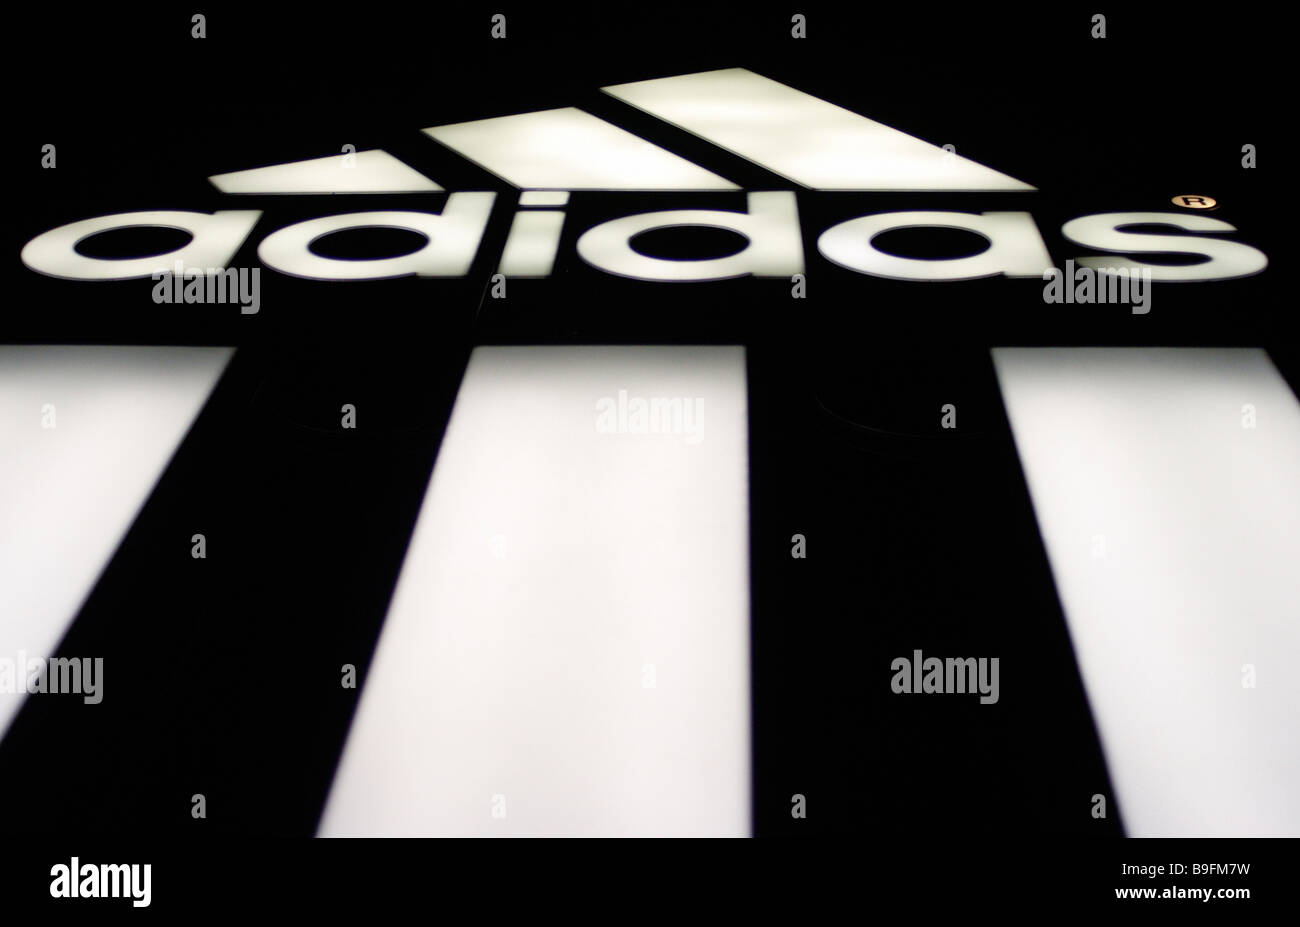 Logo di Adidas Foto stock - Alamy